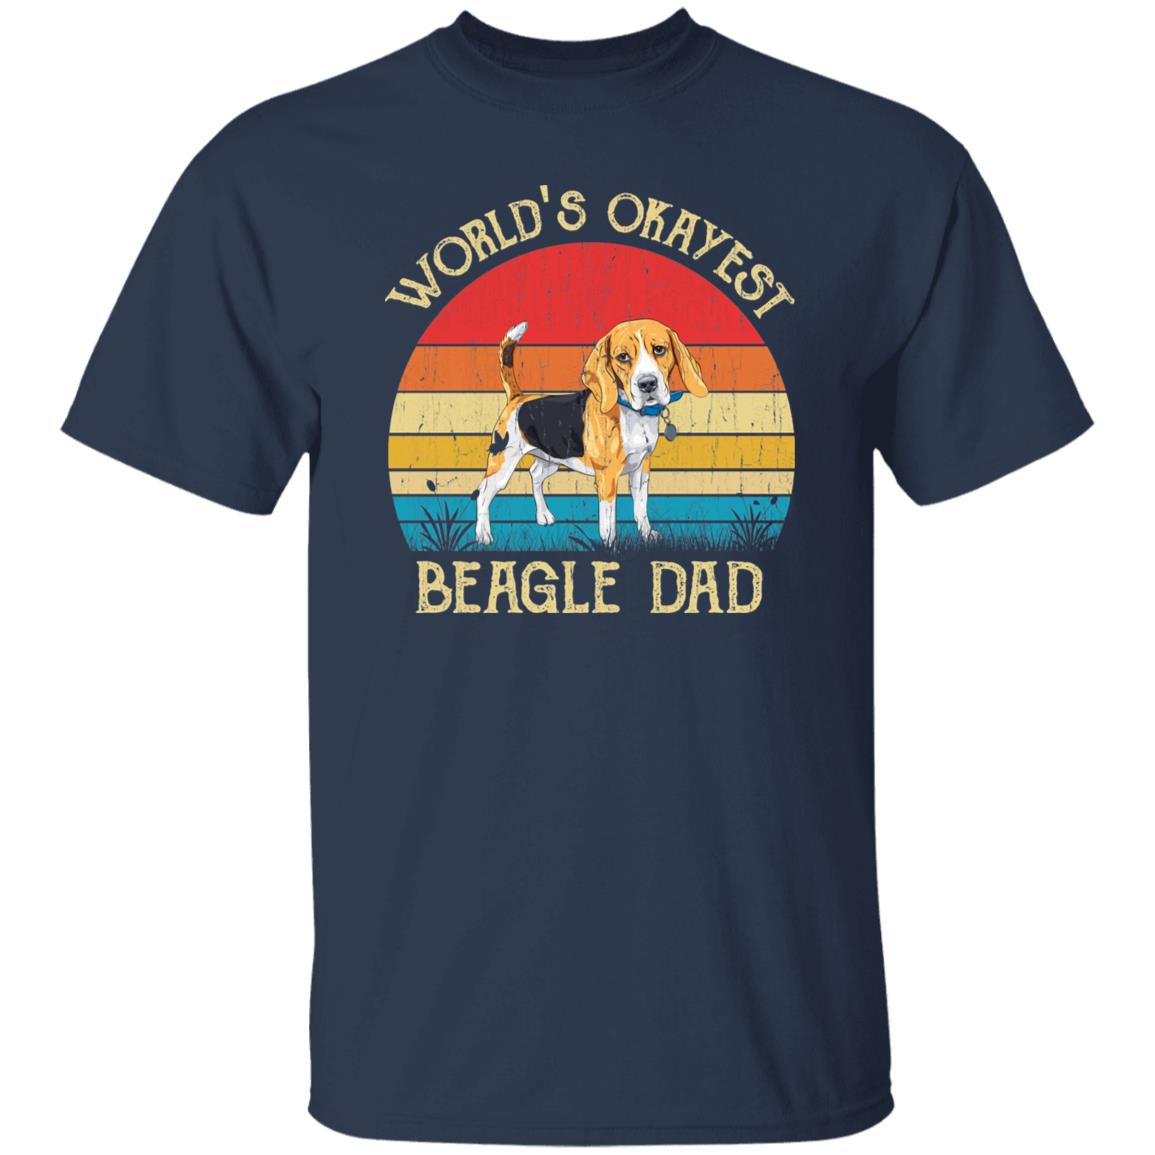 World's Okayest Beagle dad Retro Style Unisex T-shirt Black Navy Dark Heather-Navy-Family-Gift-Planet